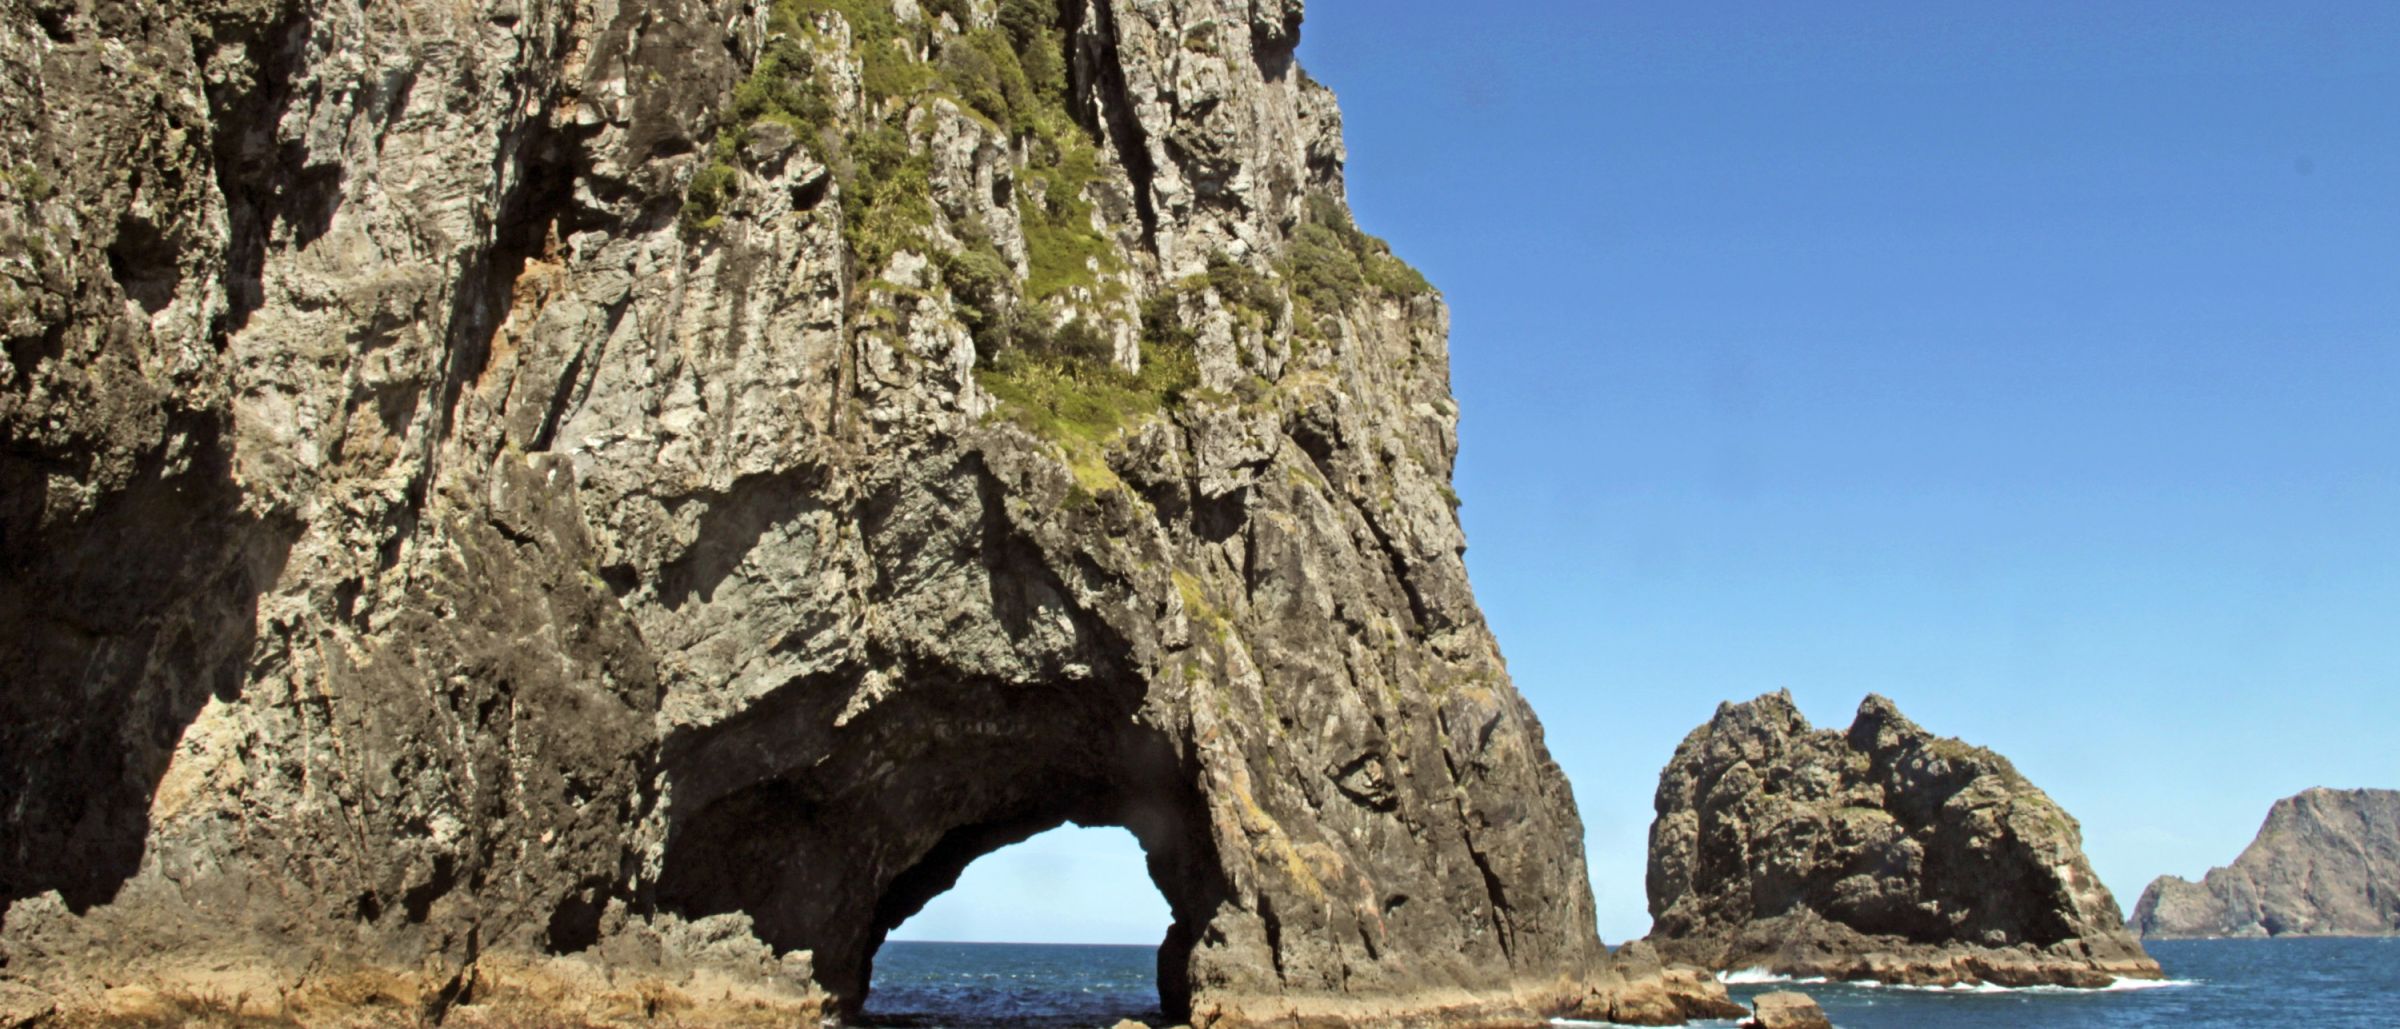 Der Elefant Rock in der Bay of Islands nahe Paiha auf der Nordinsel Neuseelands